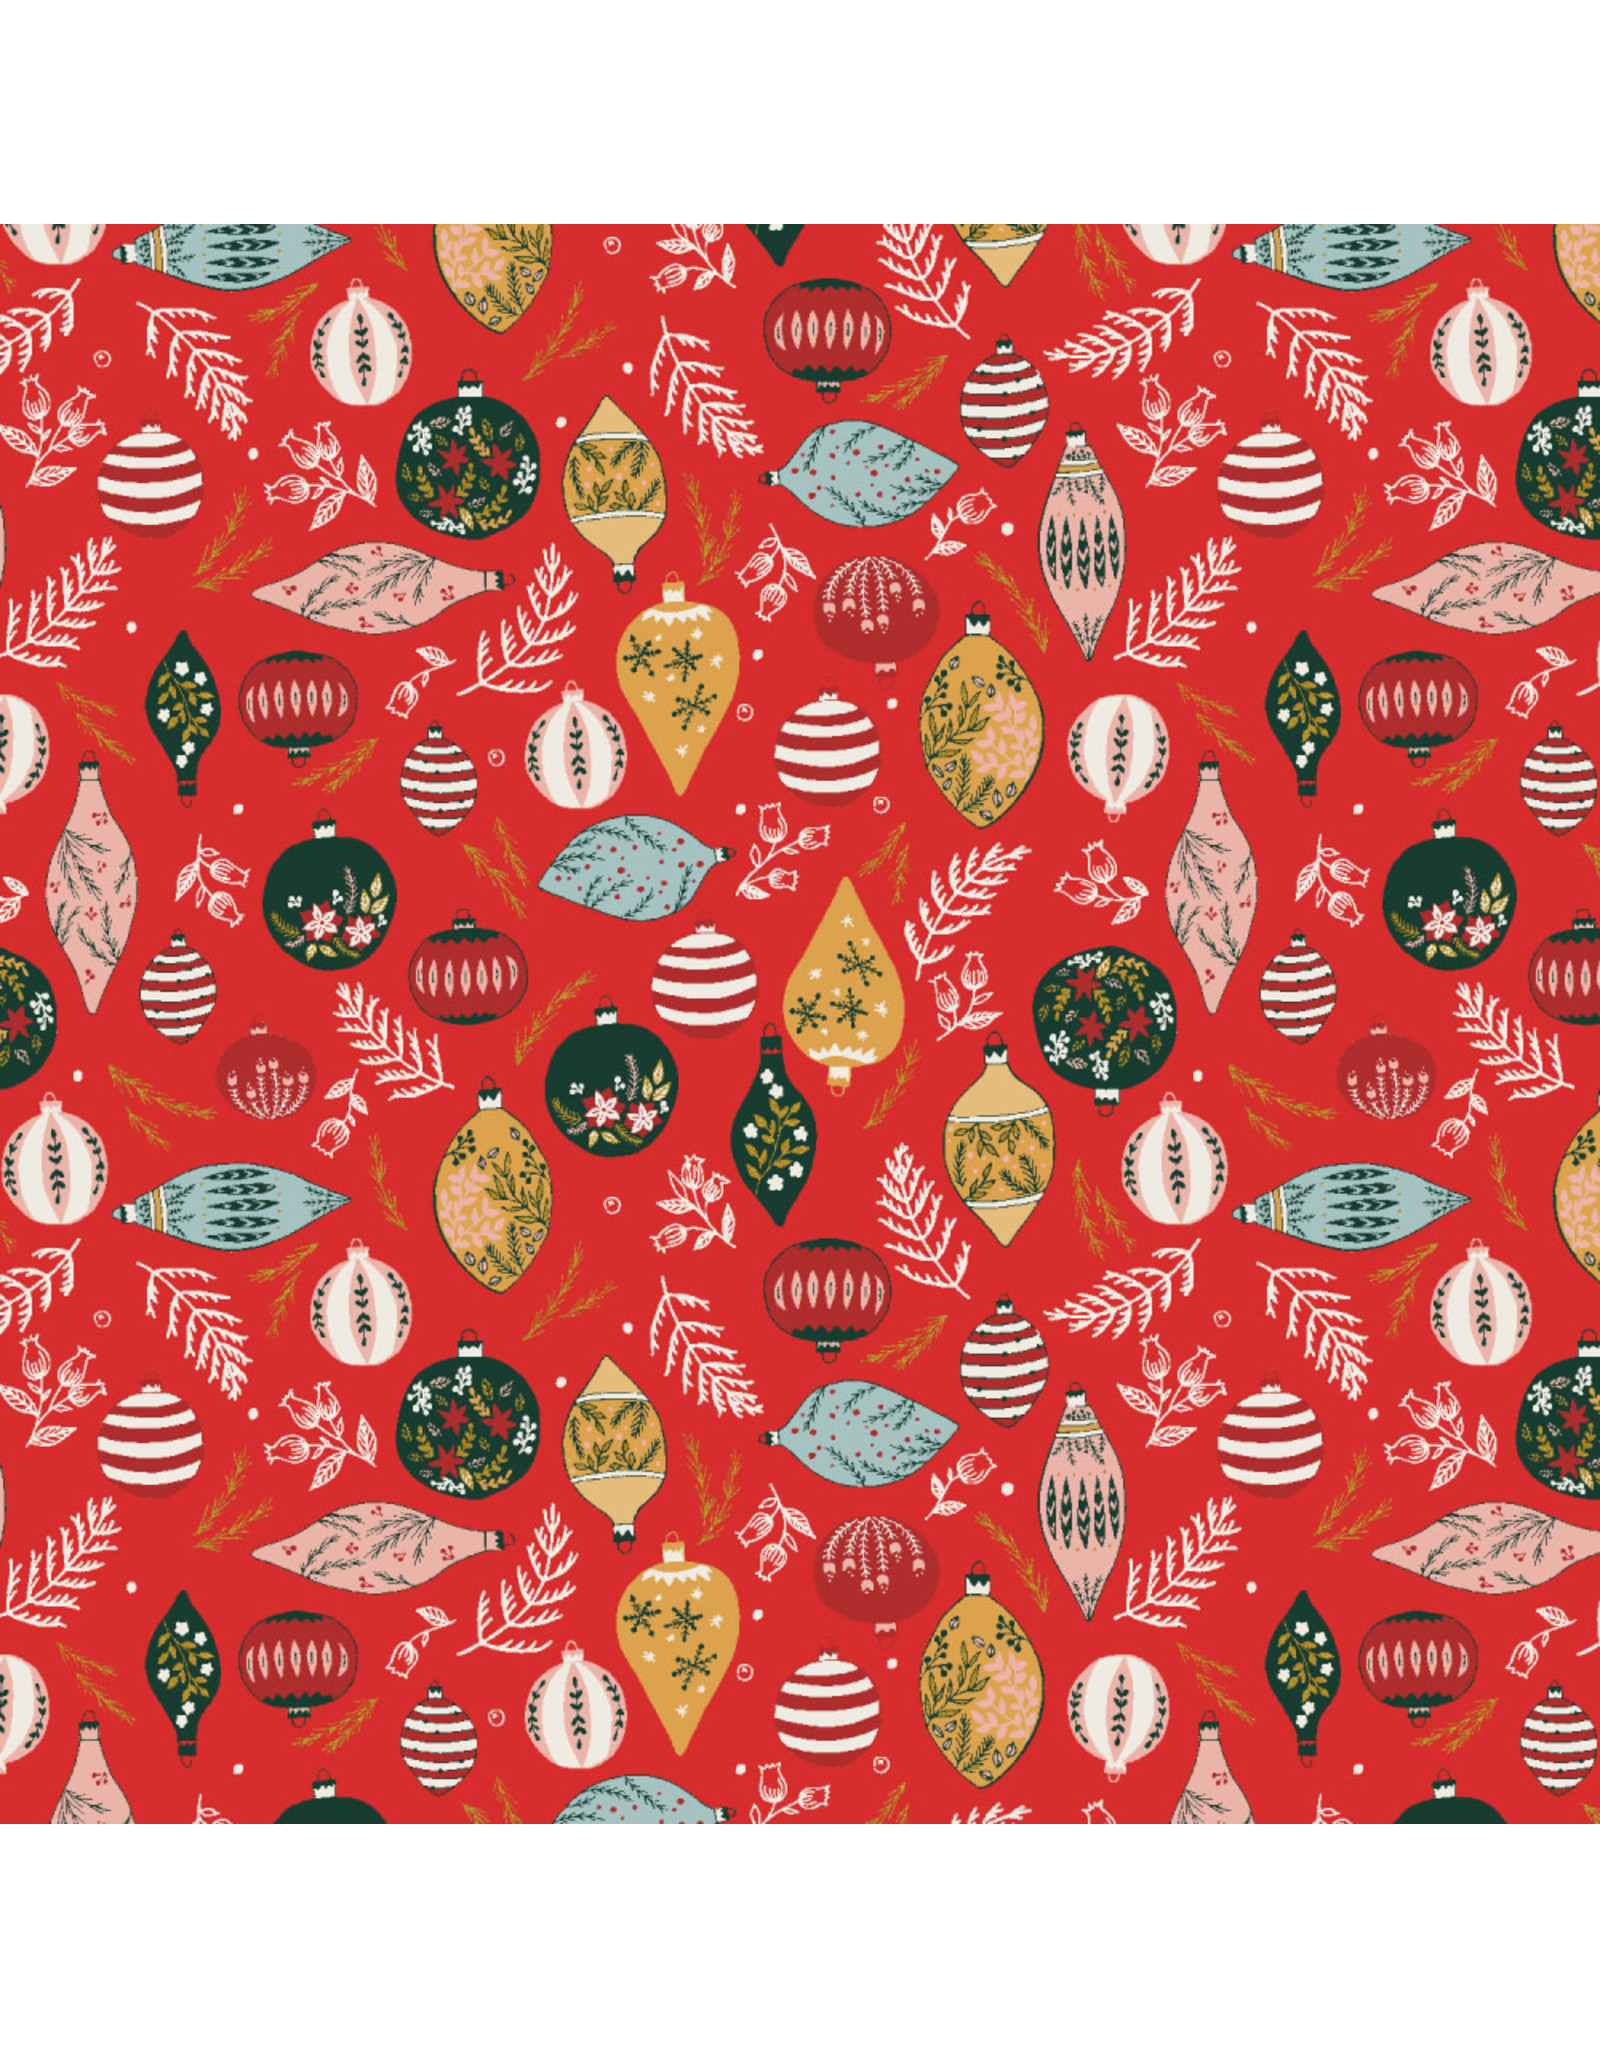 RJR Fabrics Merry Memories, Deck the Trees in Poinsettia with Metallic, Fabric Half-Yards